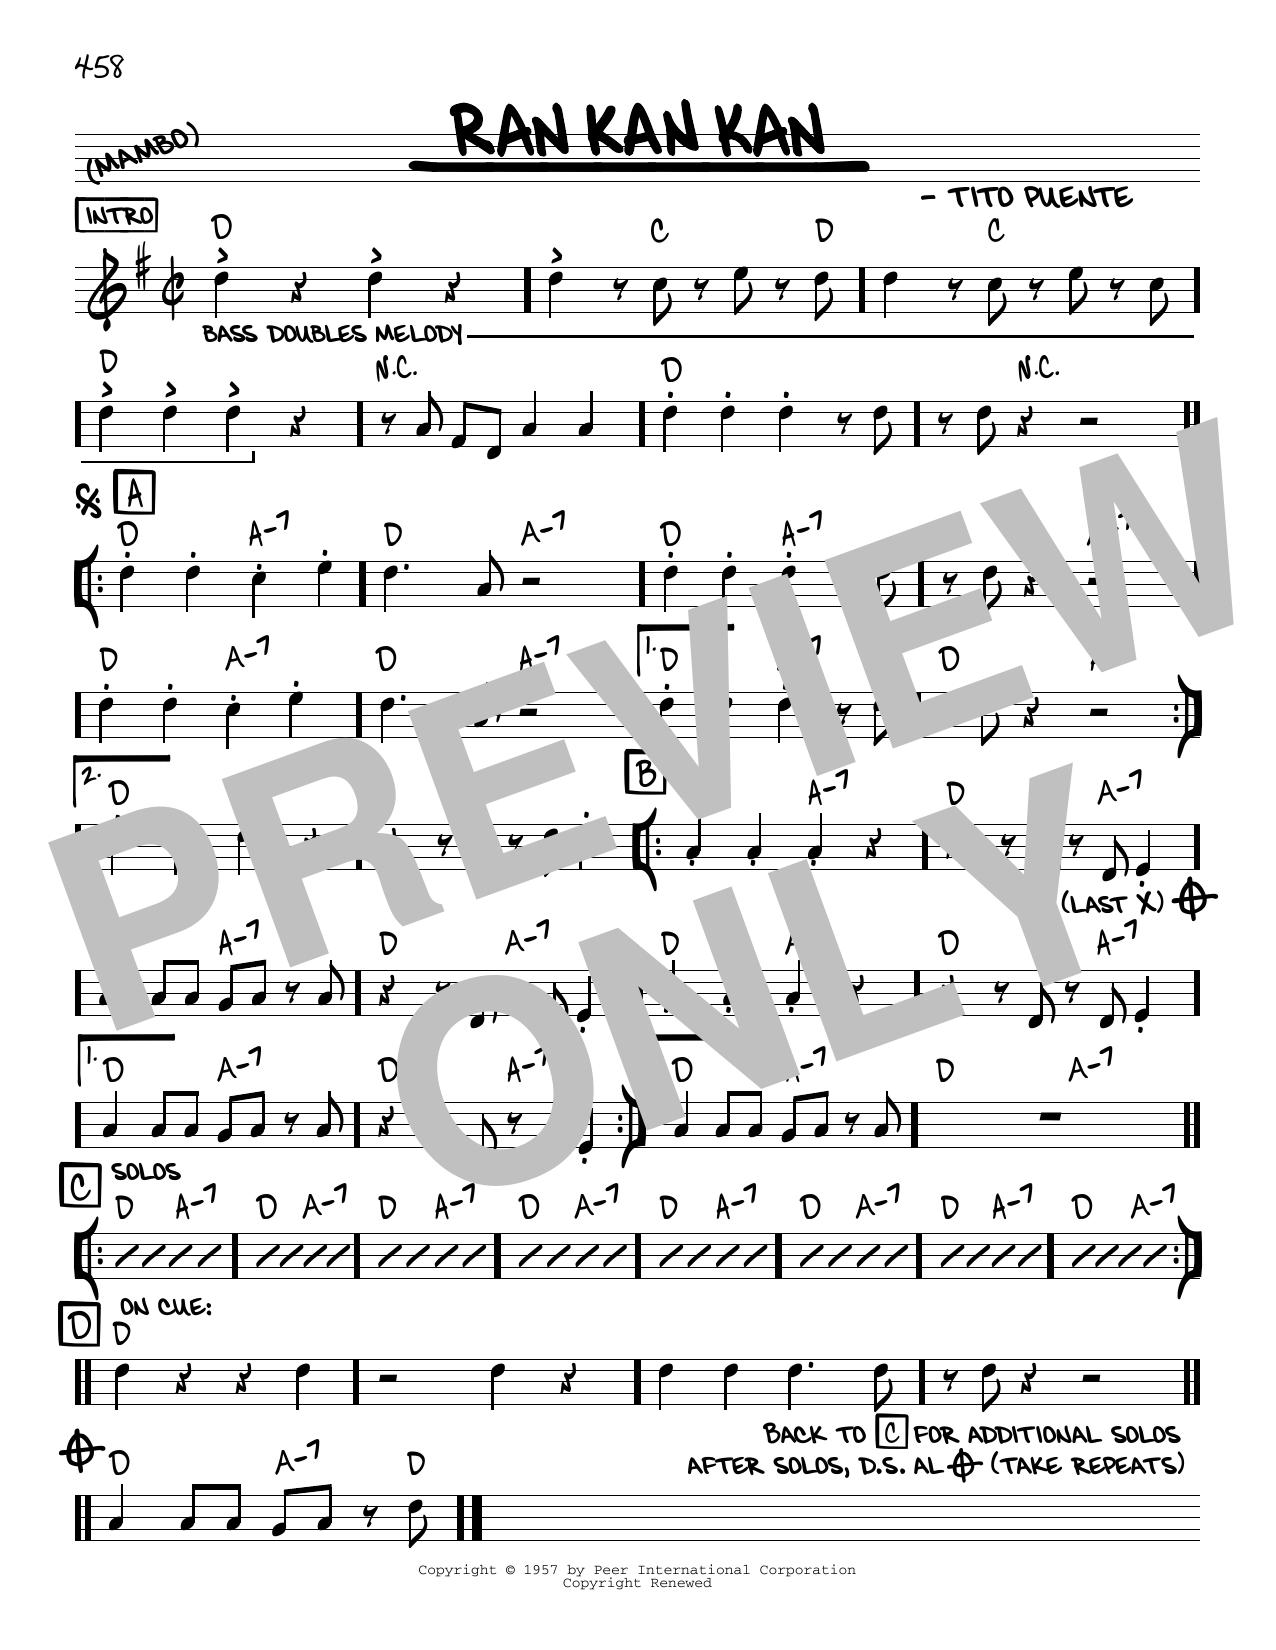 Tito Puente Ran Kan Kan Sheet Music Notes & Chords for Real Book - Melody & Chords - C Instruments - Download or Print PDF